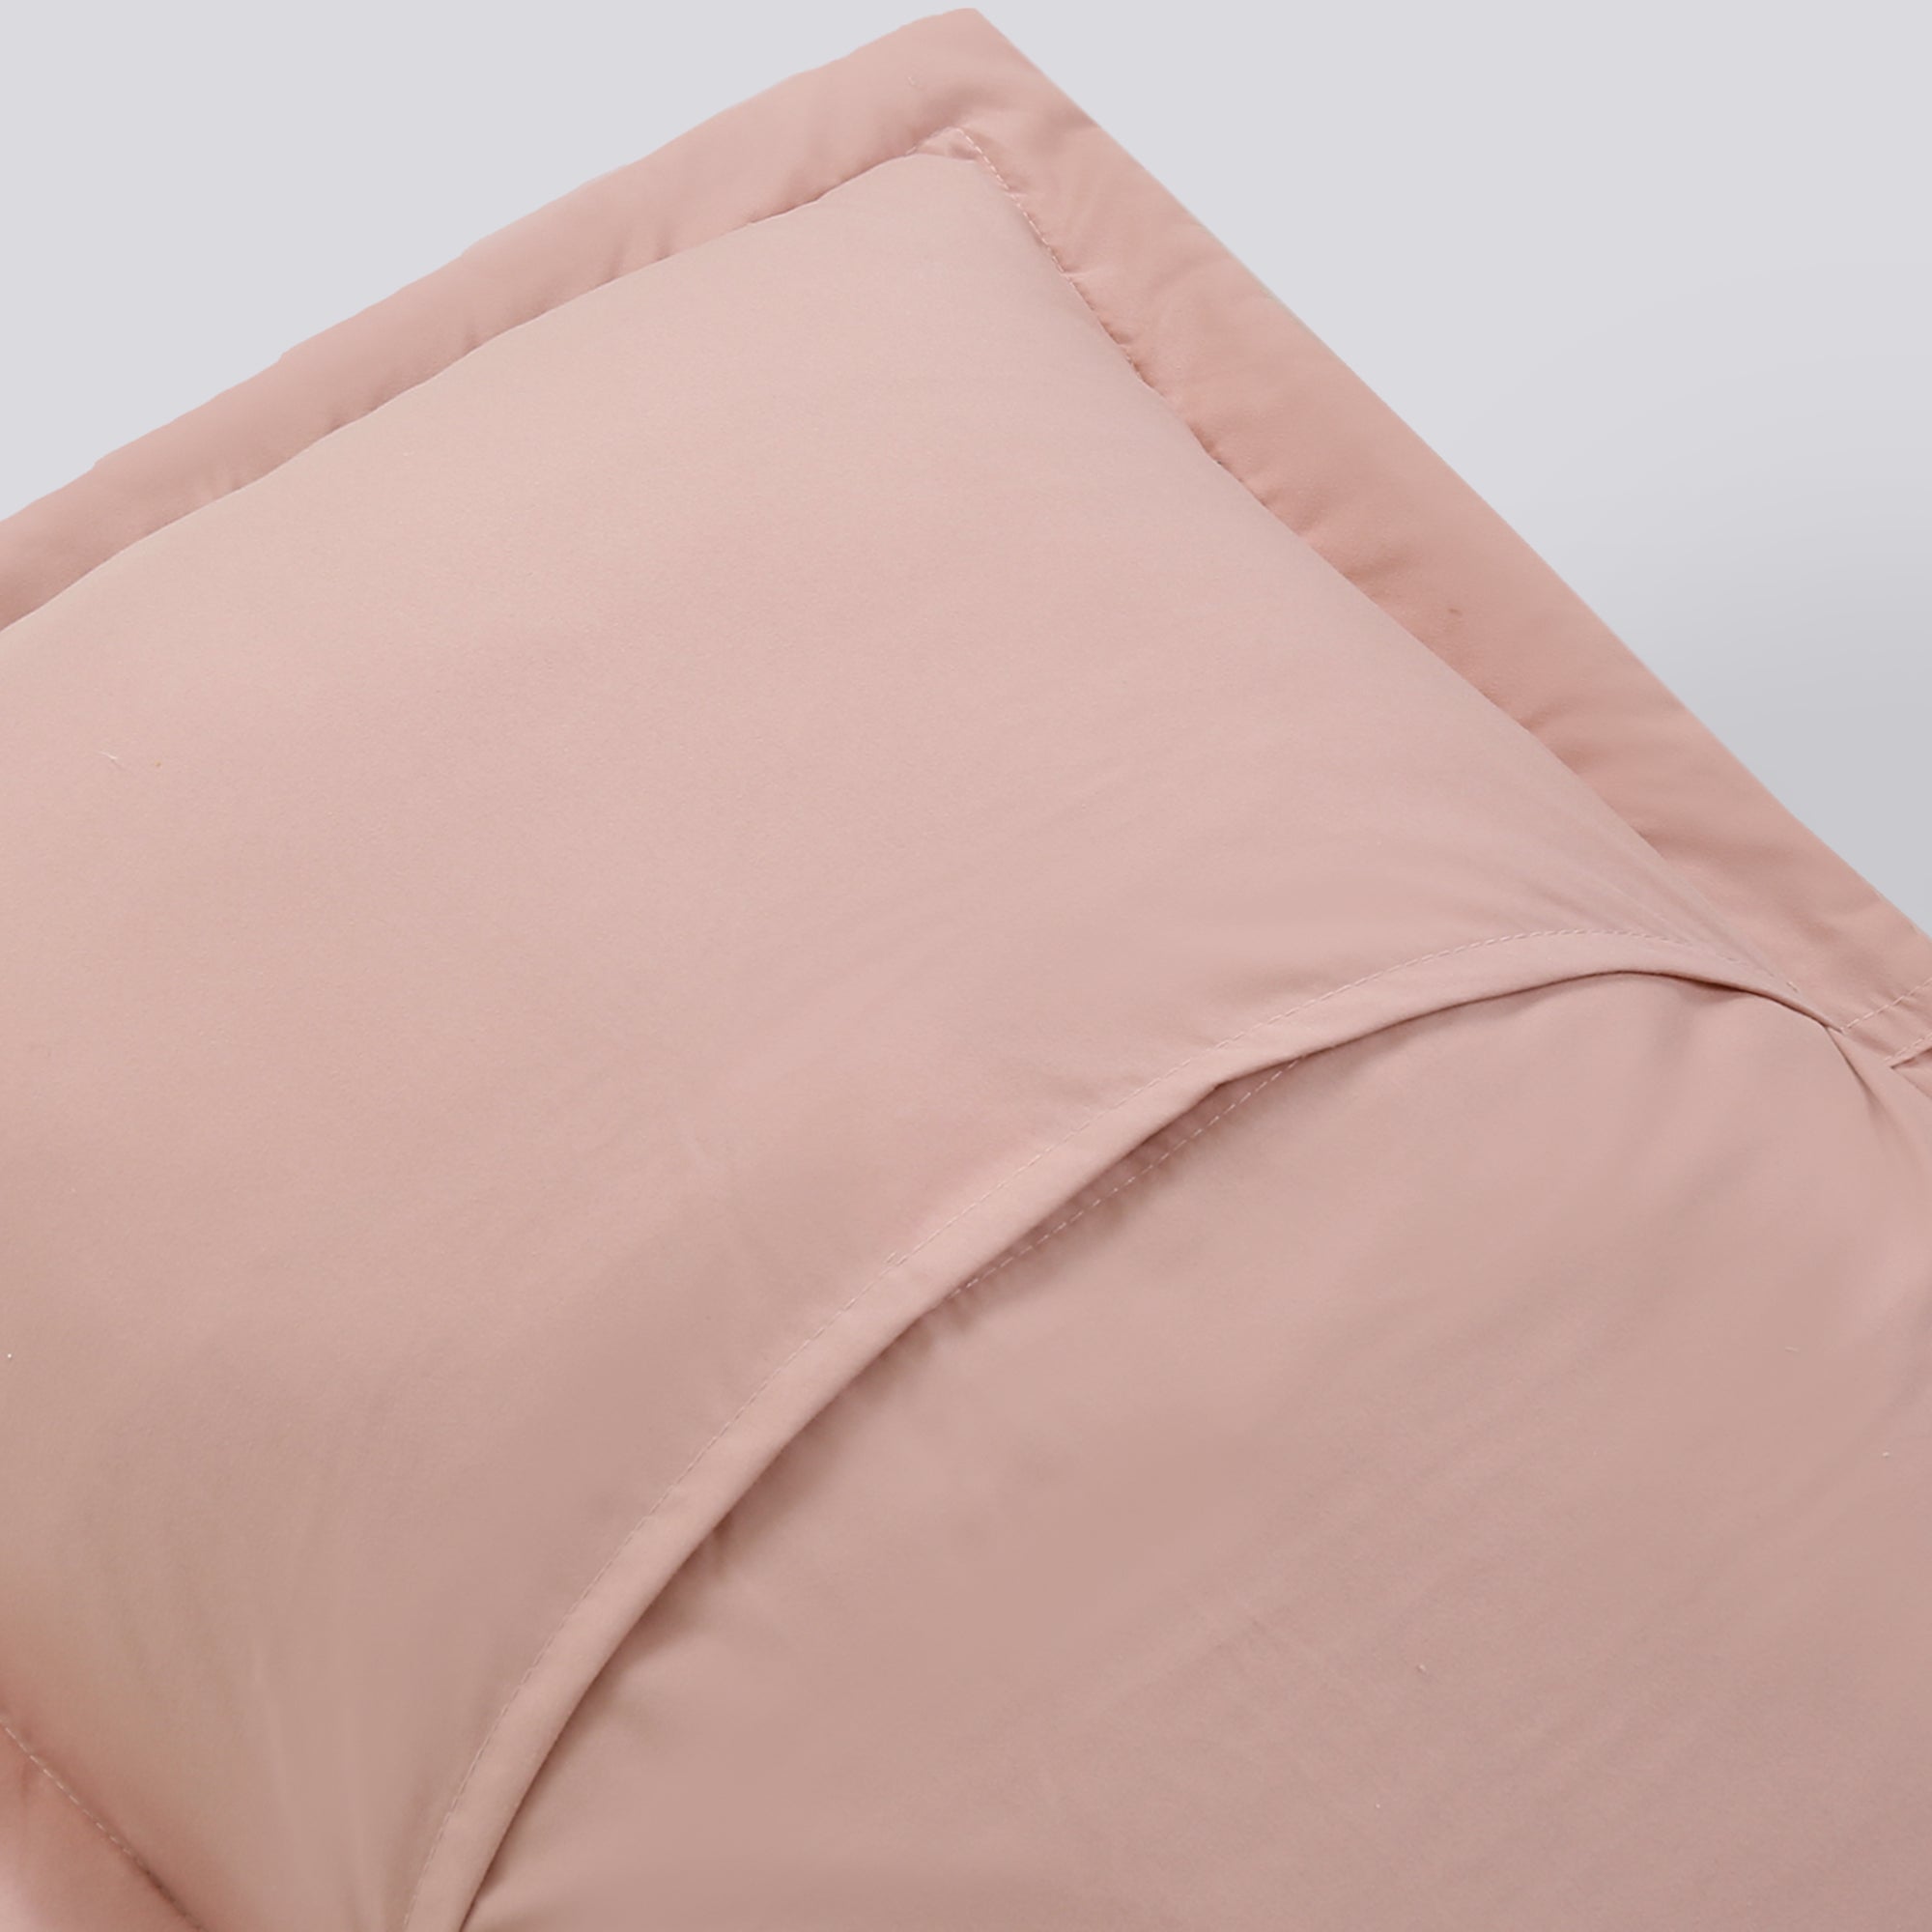 2-Piece Embroidered Pillow Shams, Queen Decorative Microfiber Pillow Shams Set Standard Size